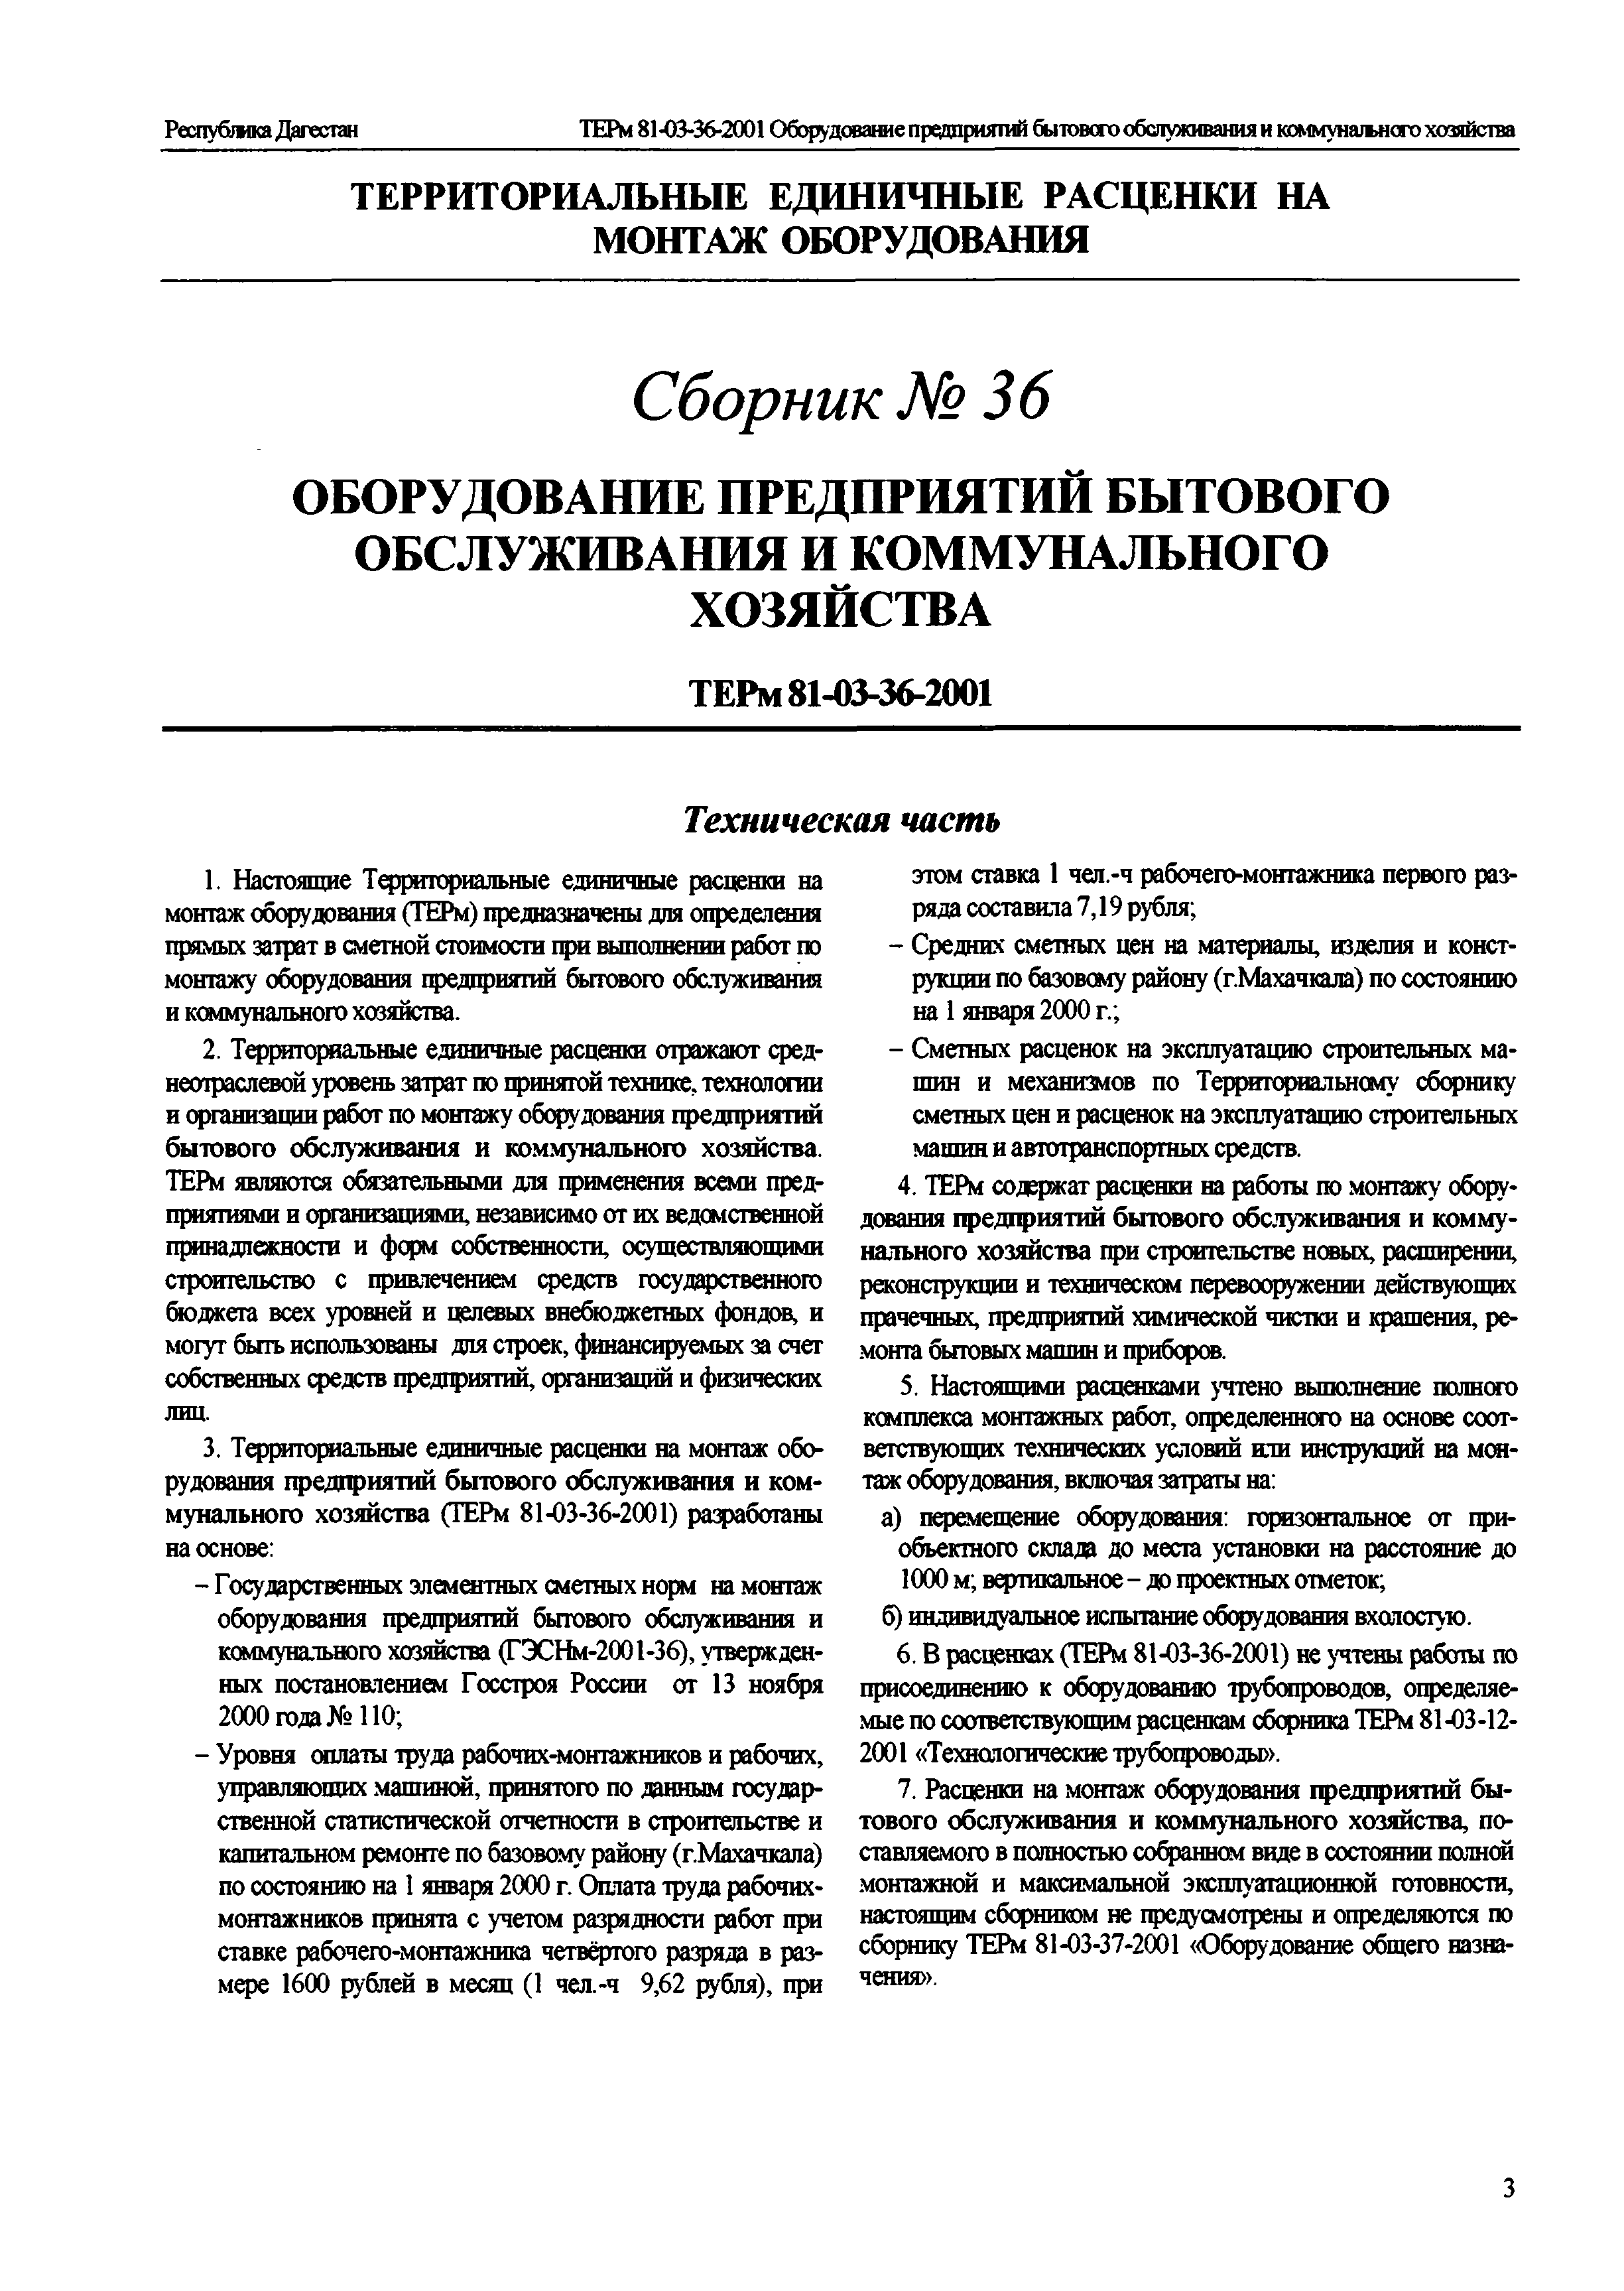 ТЕРм Республика Дагестан 2001-36